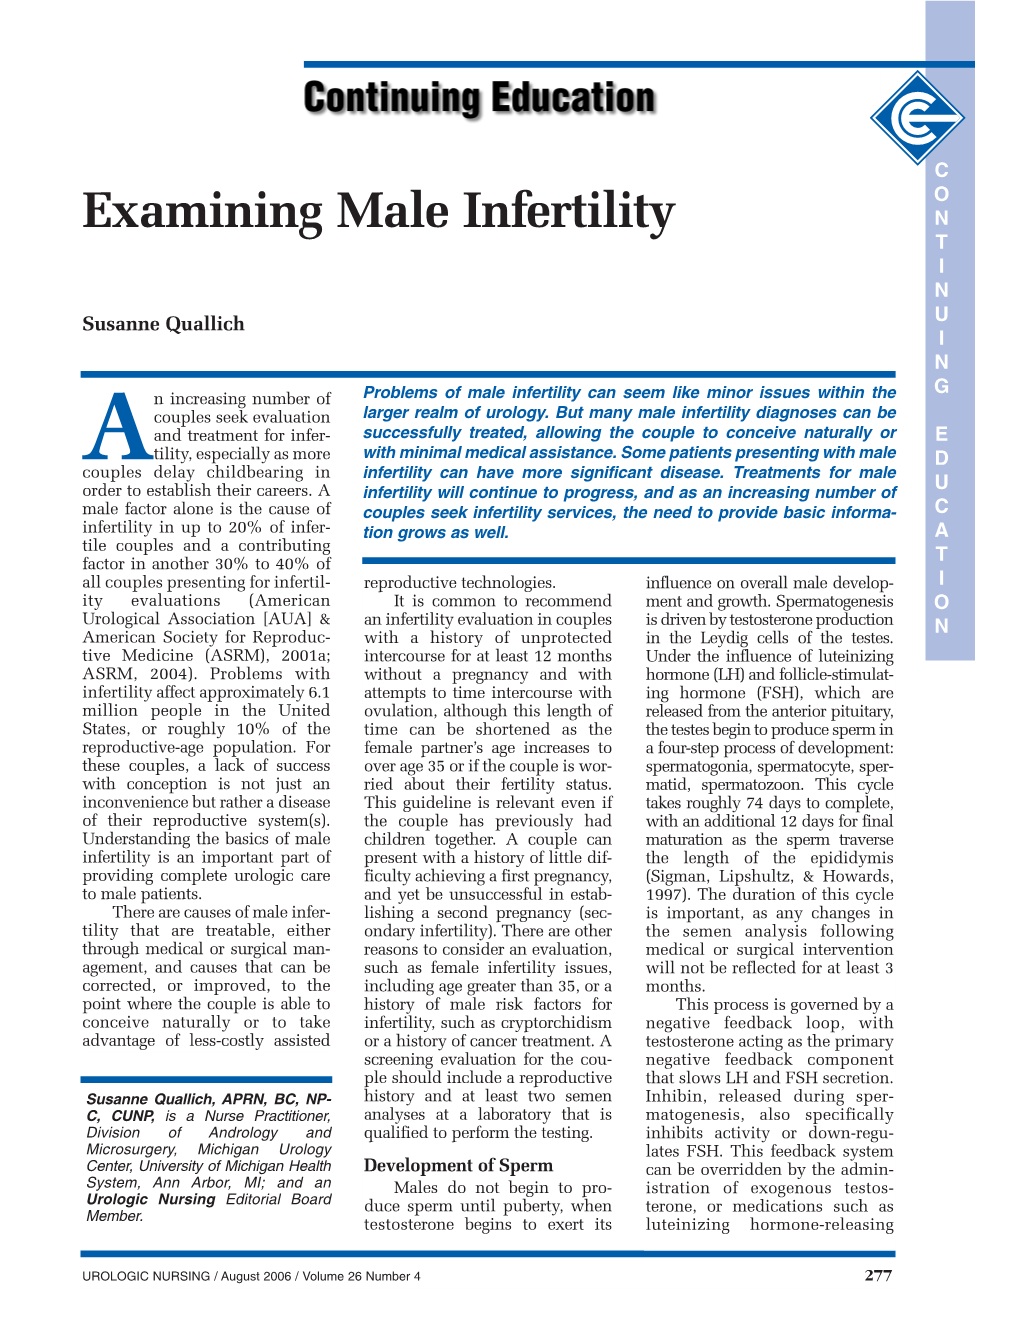 Examining Male Infertility